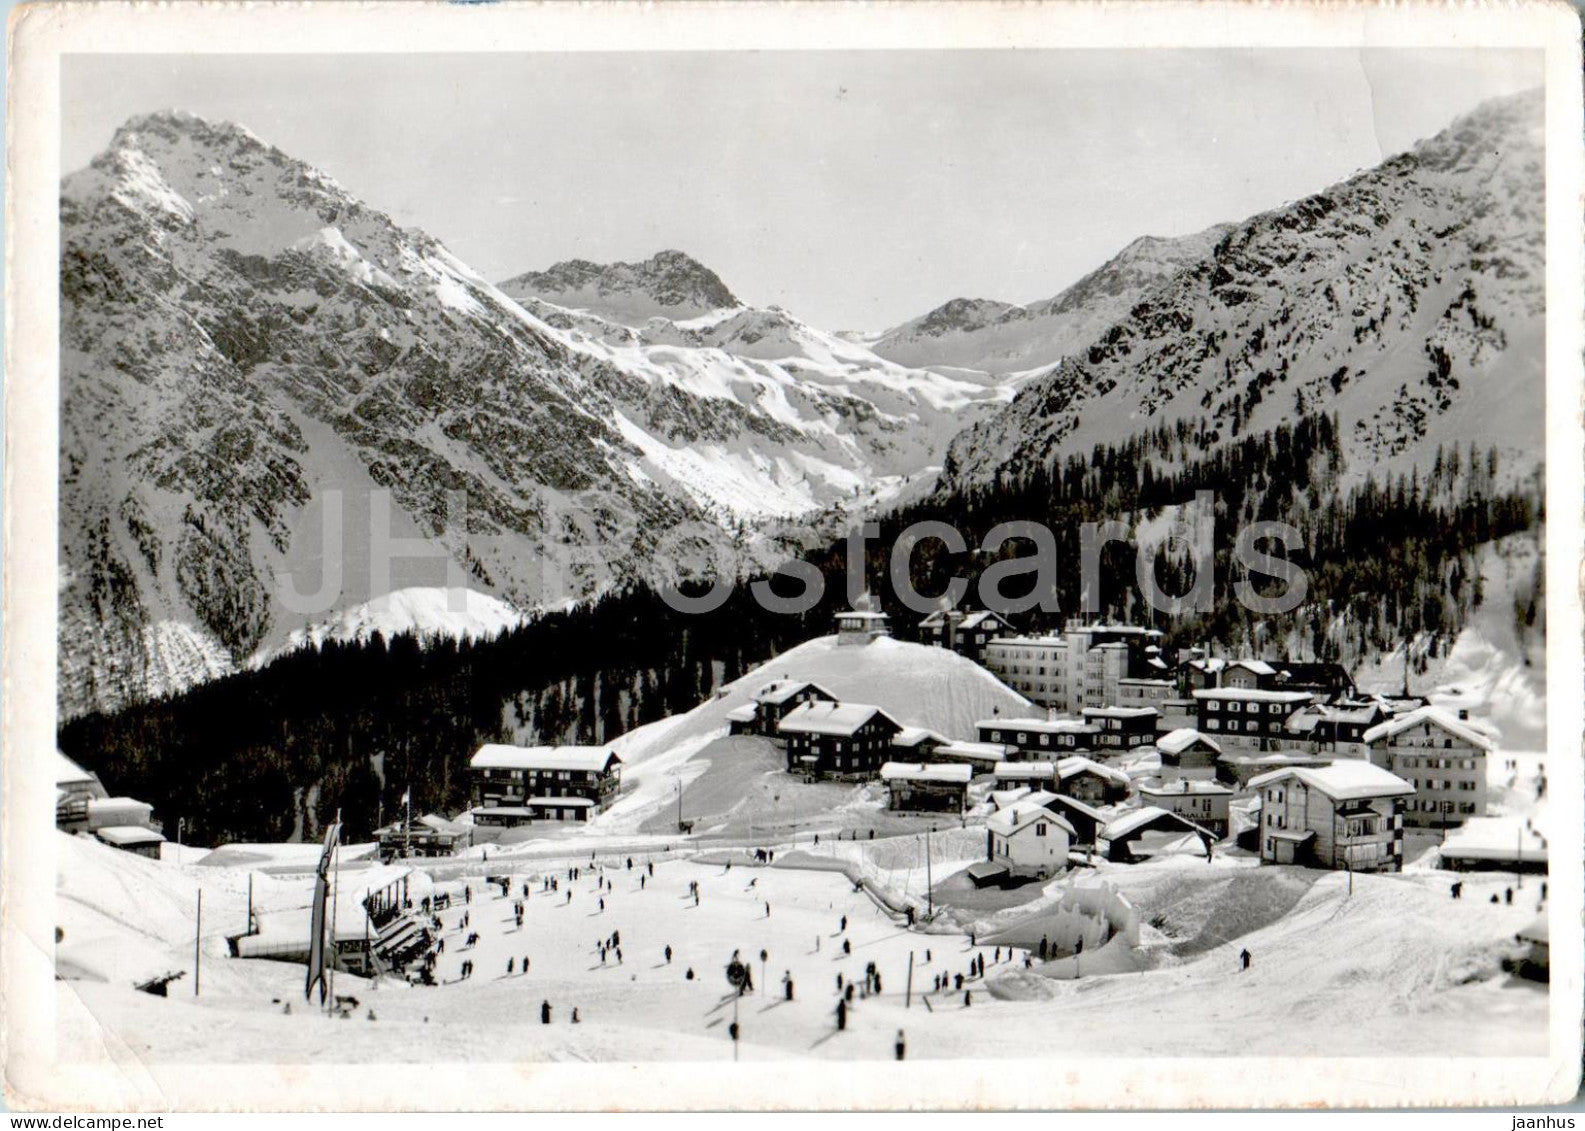 Arosa Kulm mit Eisbahn - 793 - old postcard - Switzerland - used - JH Postcards